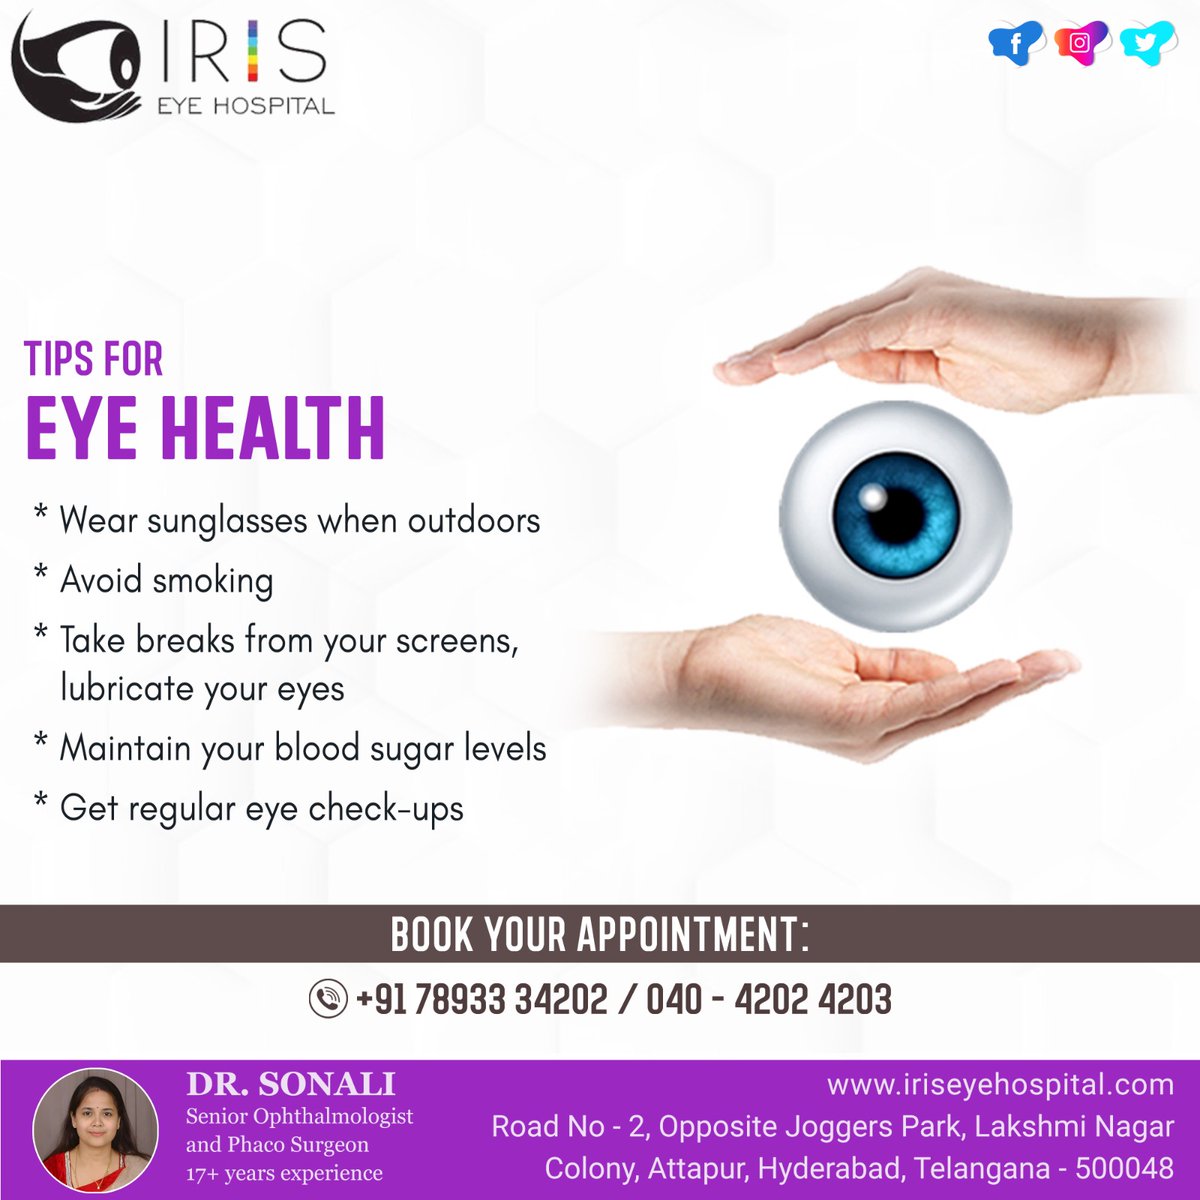 Protect your vision! Wear UV-blocking sunglasses, take screen breaks, eat leafy greens, and get regular eye exams. Your eyes deserve the best care.
 
 #DrSonali #Ophthalmologist #EyeSurgeon #IrisHospital #Attapur #Telangana #AdvancedCataractSurgery #MultiFocalLens #NoMoreGlasses